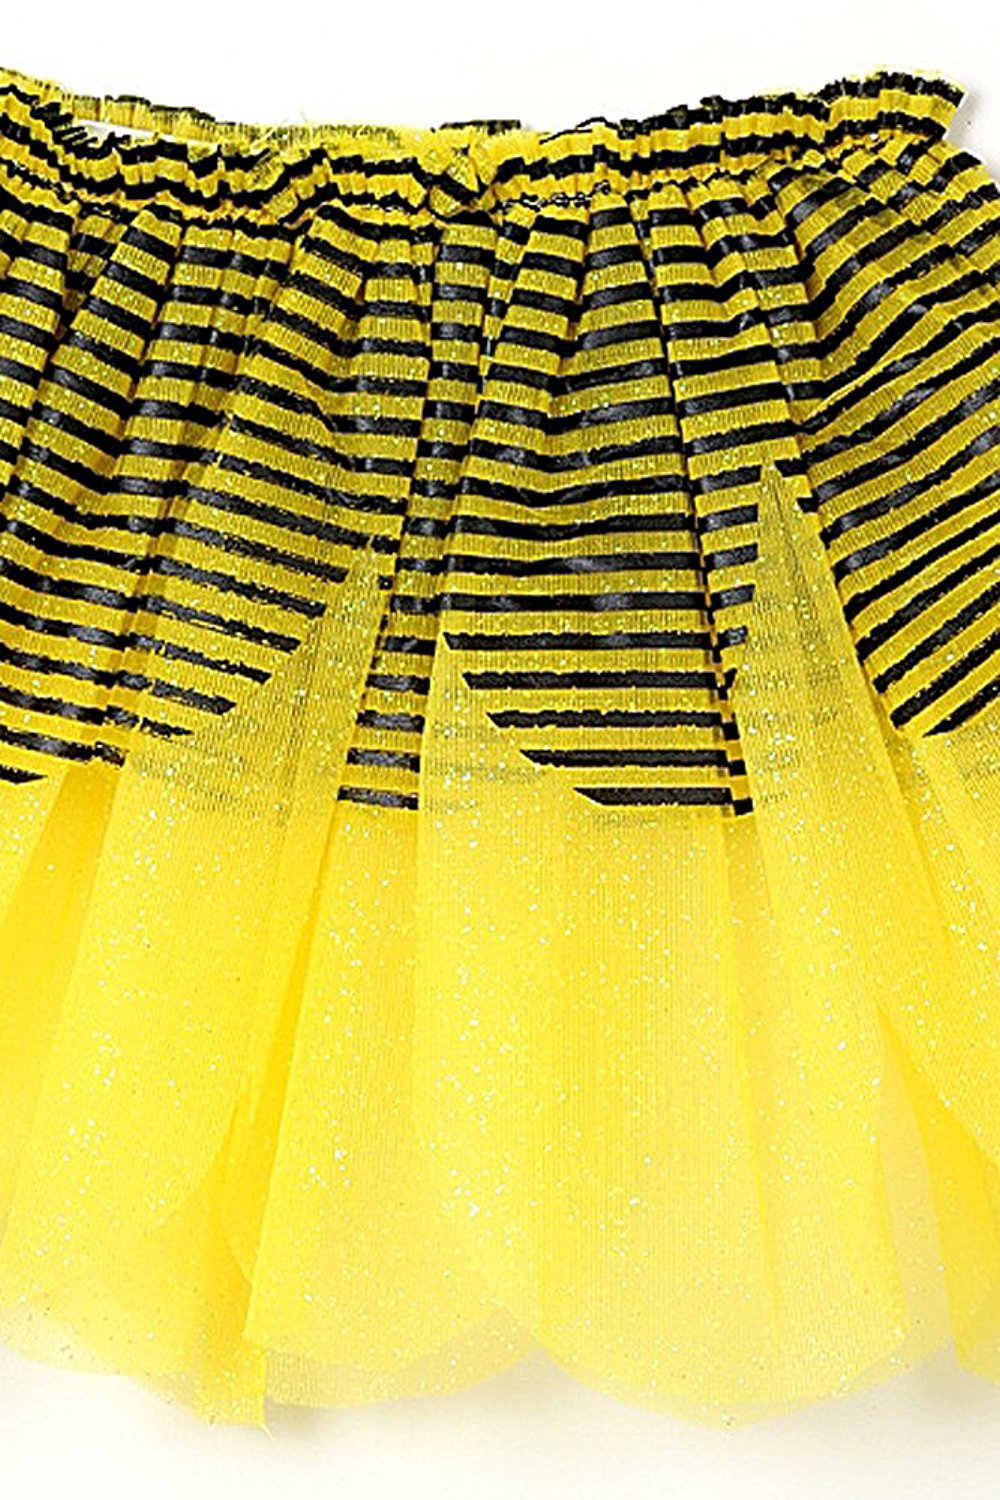 Yellow Toddler Girl Bumble Bee Wings Tutu Wand Costume Dress Up Set